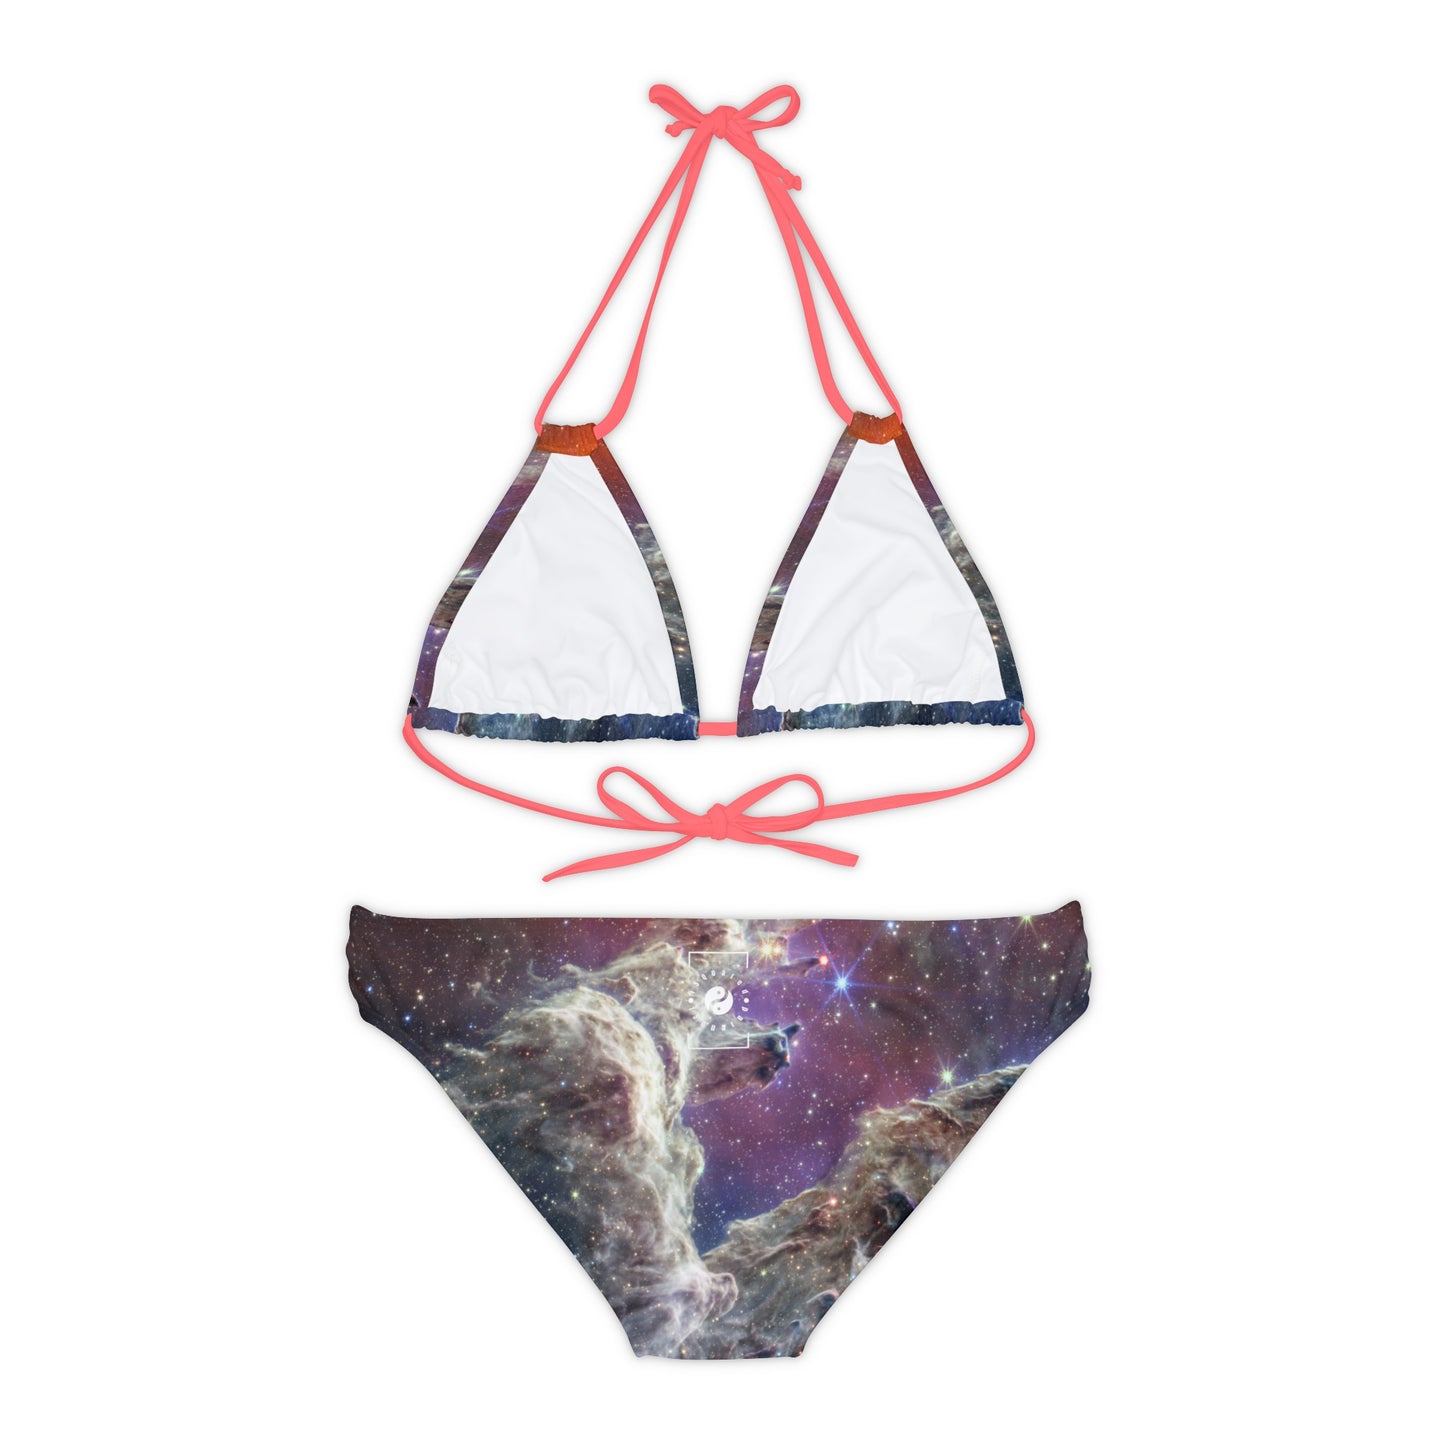 Pillars of Creation (NIRCam and MIRI Composite Image) - JWST Collection - Lace-up Bikini Set